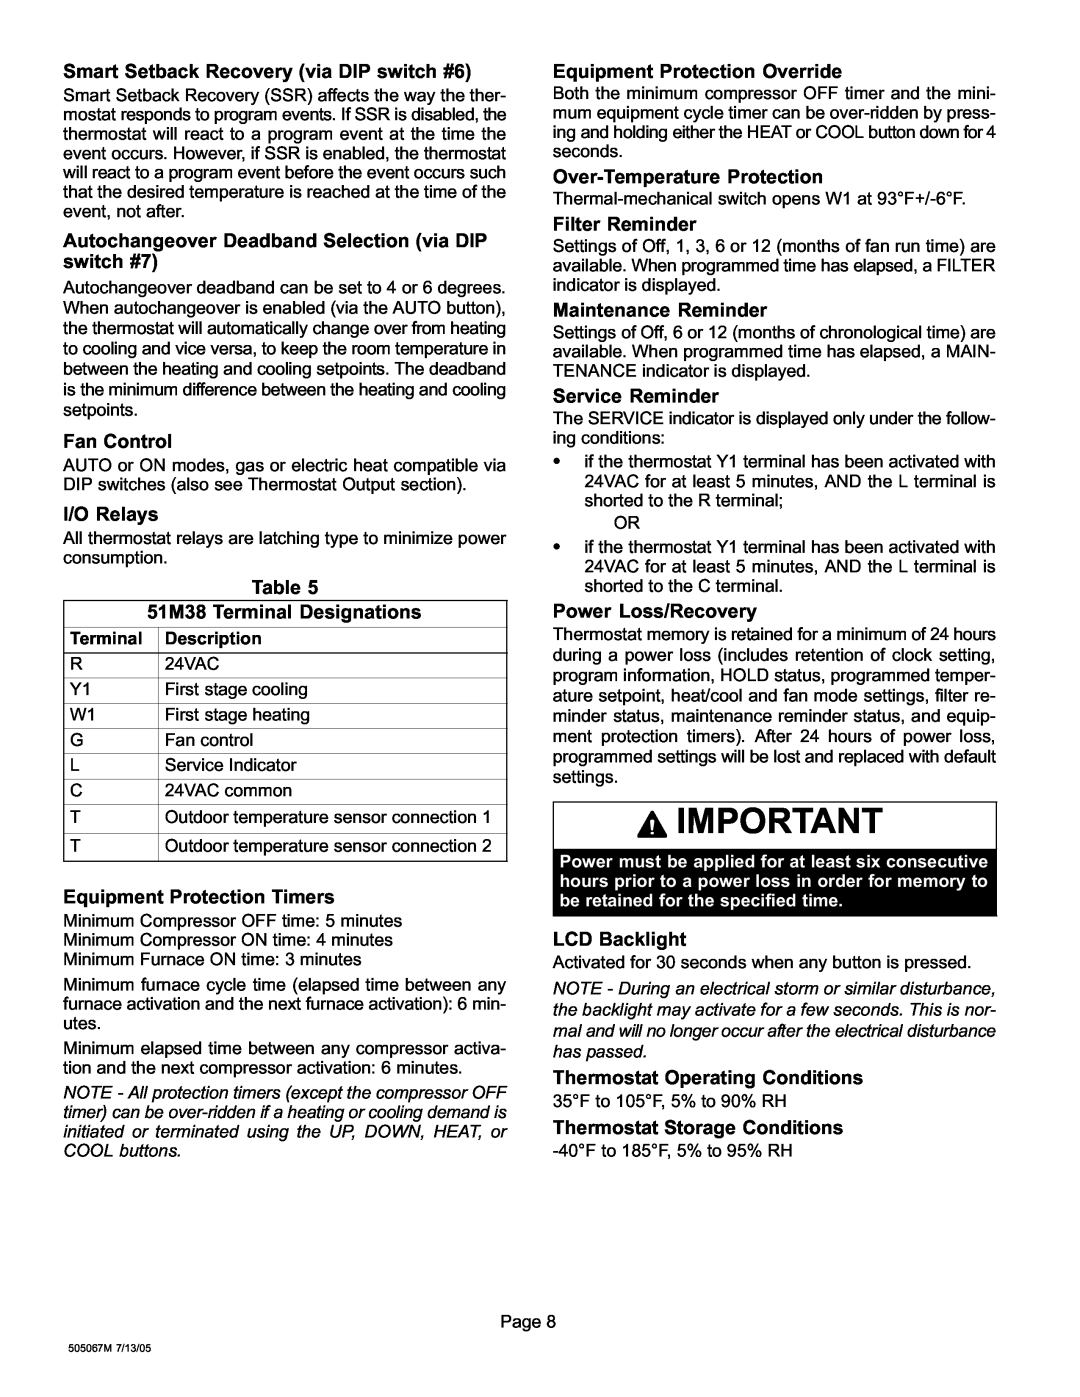 Lennox International Inc 51M37 operation manual Smart Setback Recovery via DIP switch #6 